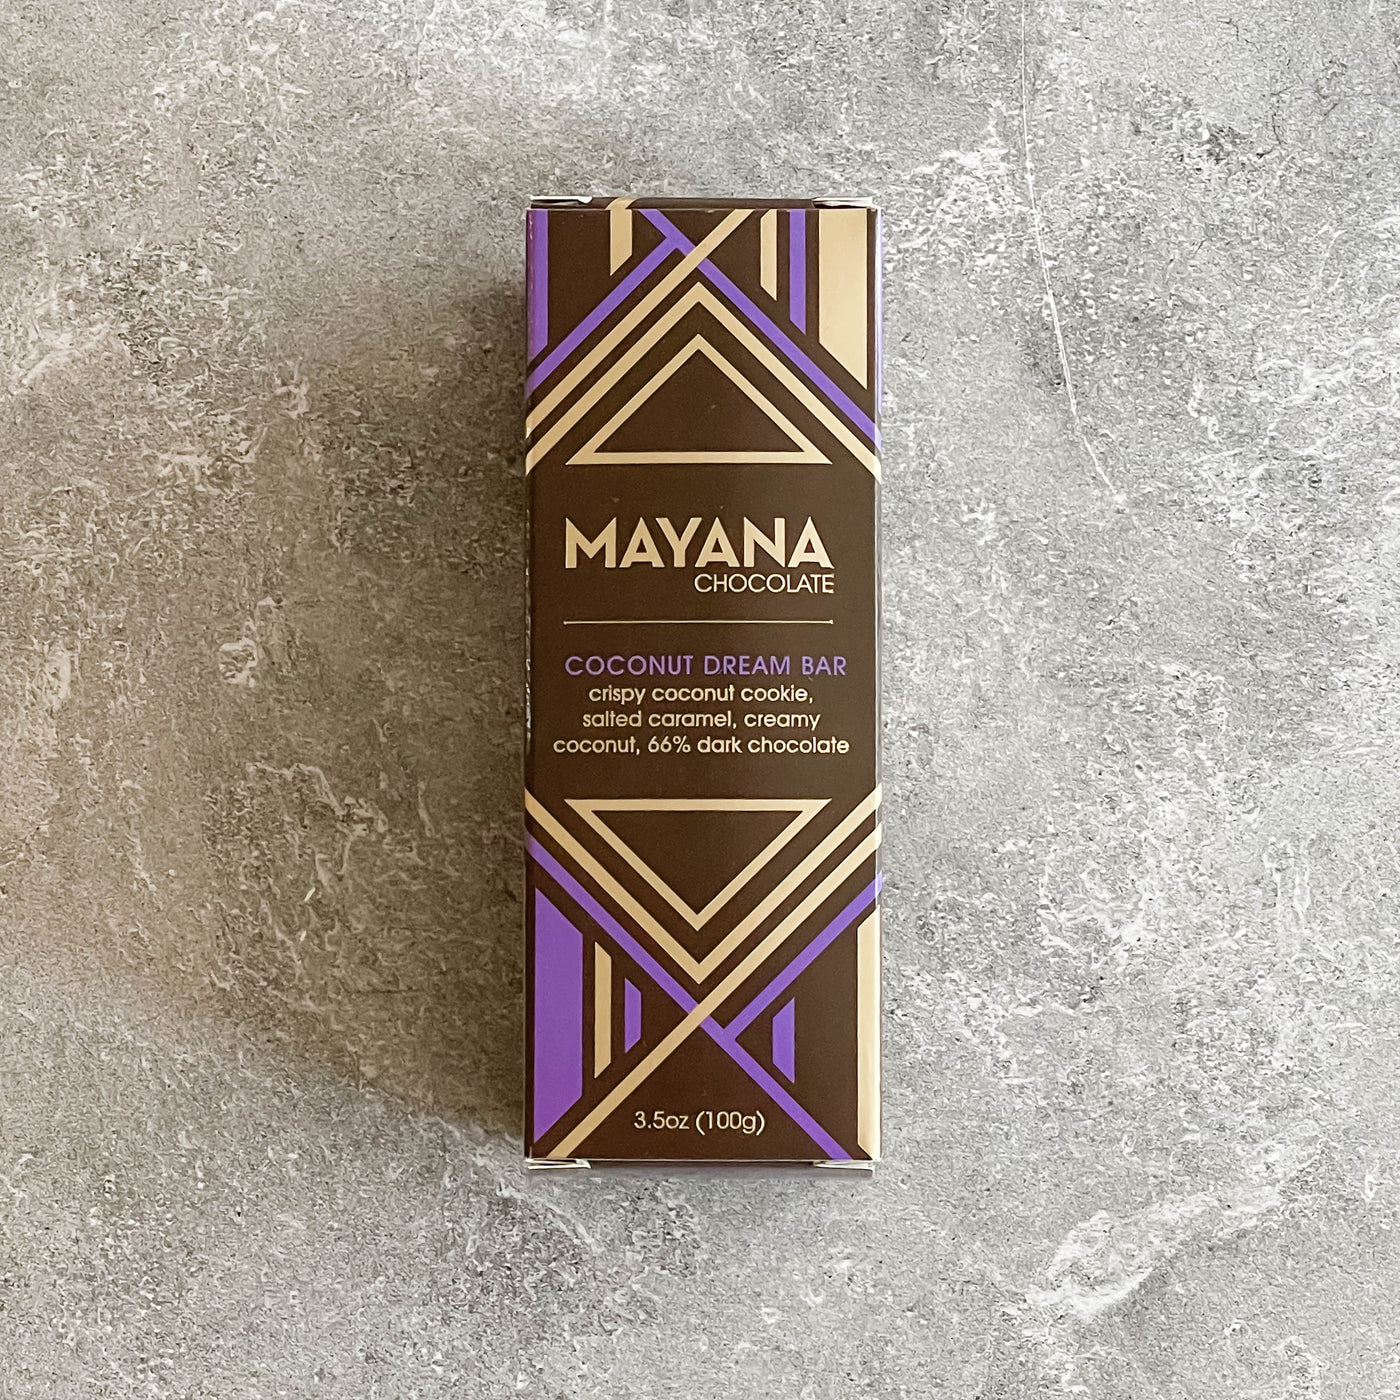 COCONUT DREAM BAR / Mayana Chocolate / Wisconsin